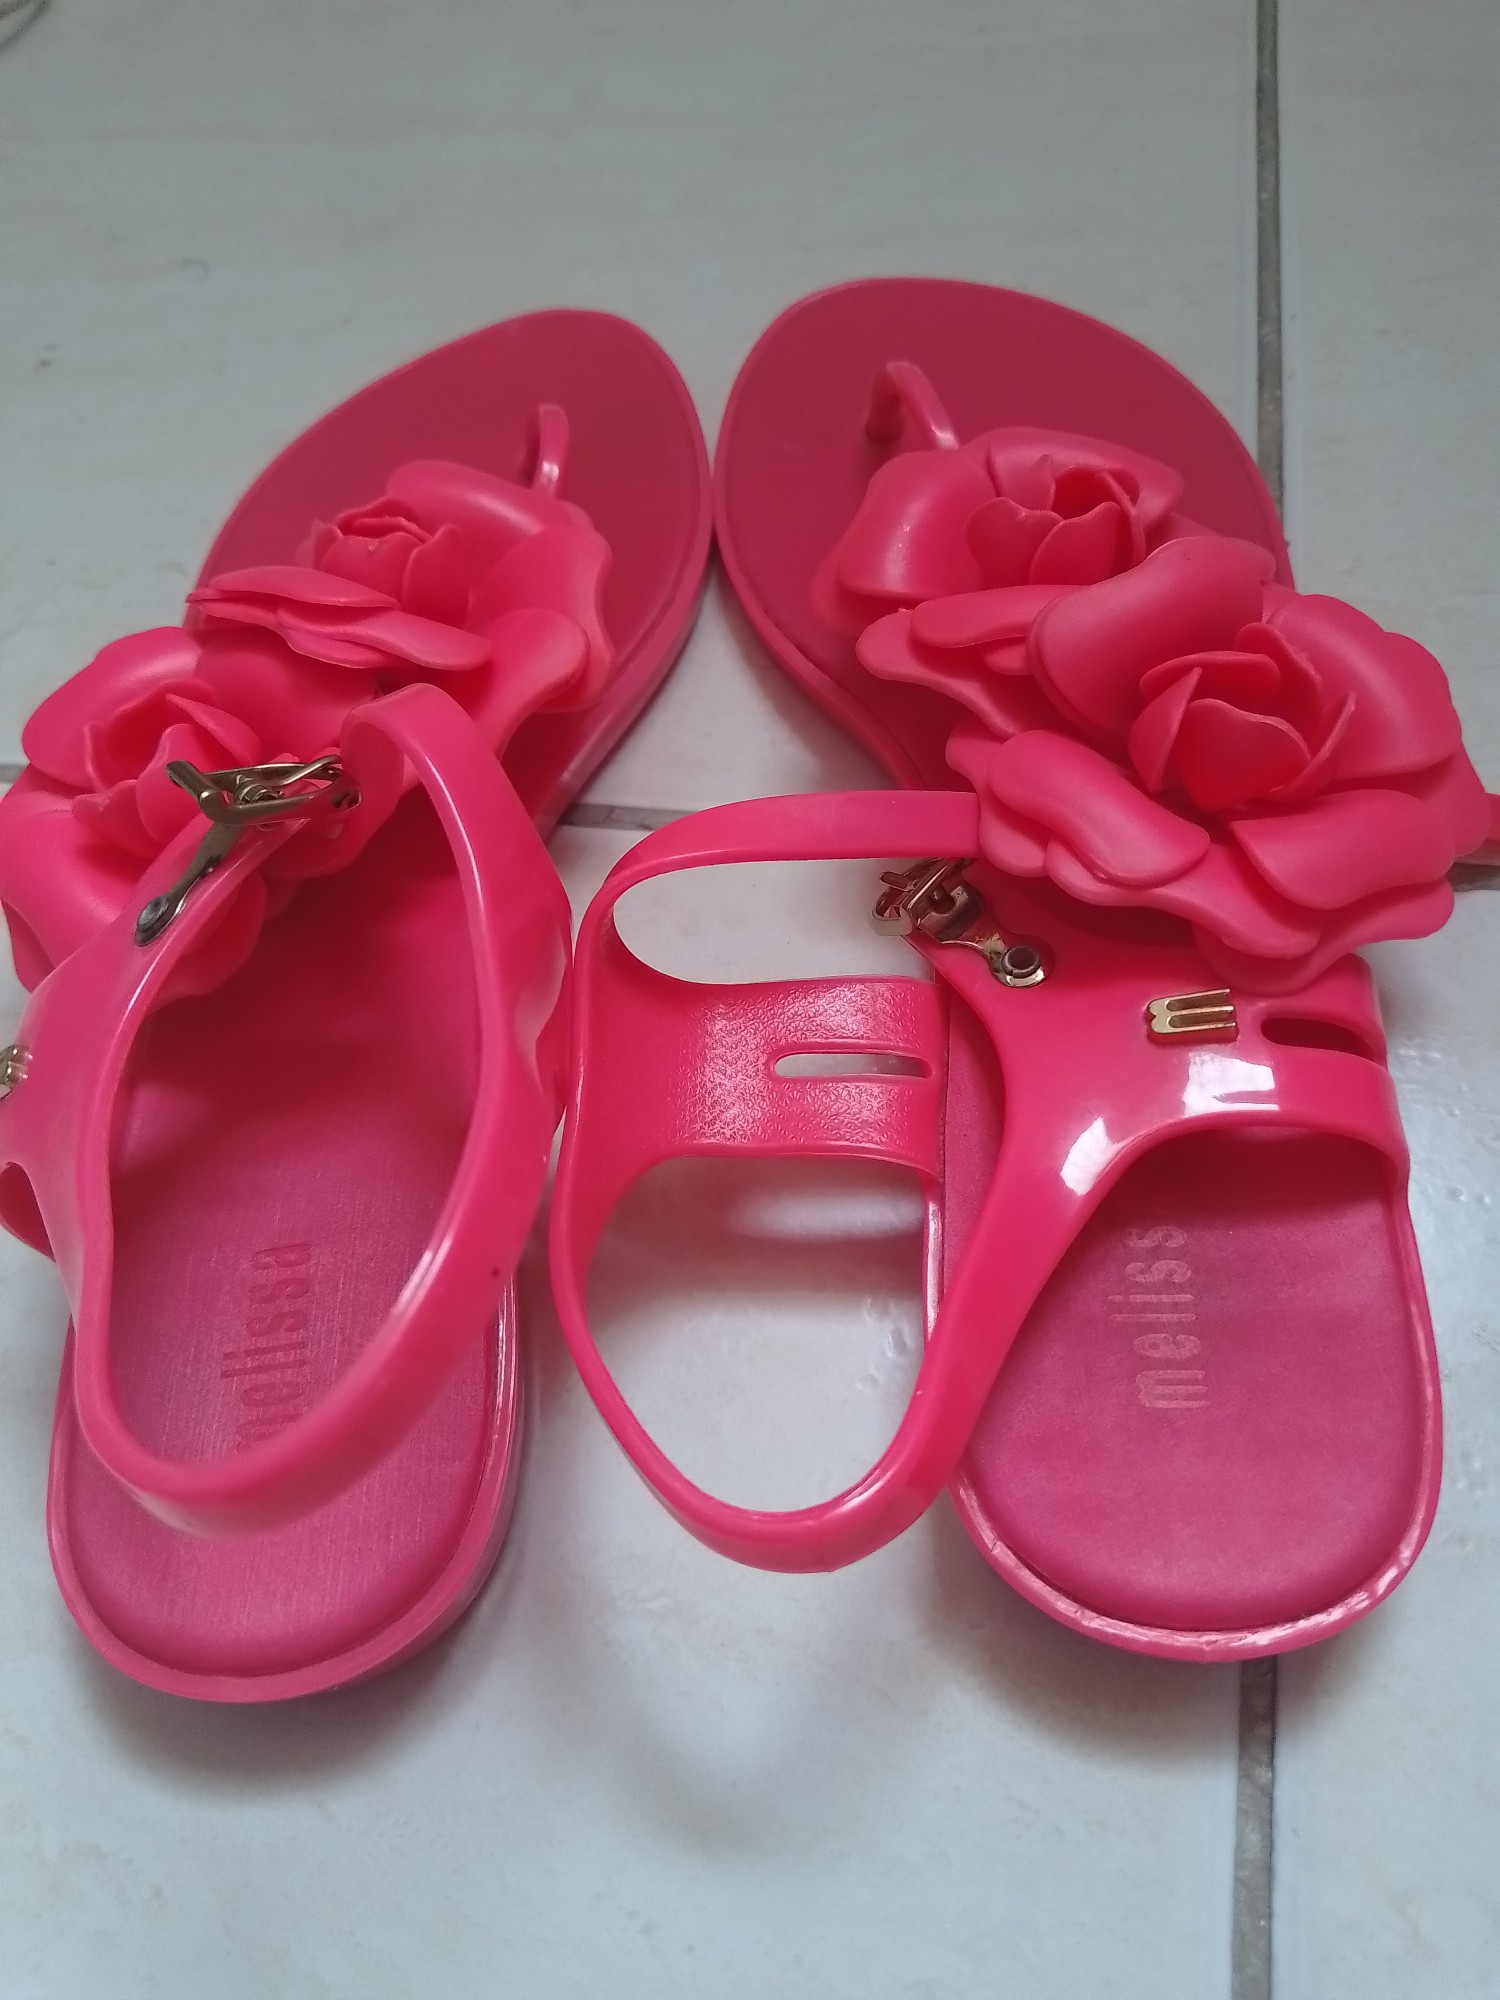 zapatos para mujer - Zapatillas con flores MELISSA size 8 sapatillas color rosa no son marca falsa 0